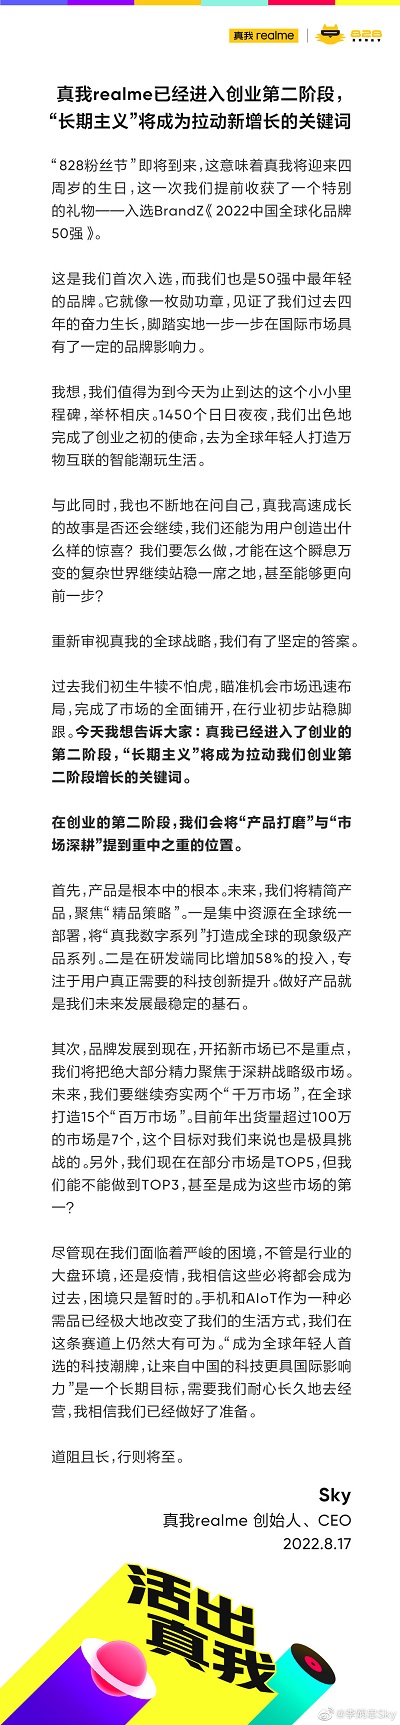 realme创始人李炳忠发布四周年公开信，真我已经进入创业第二阶段